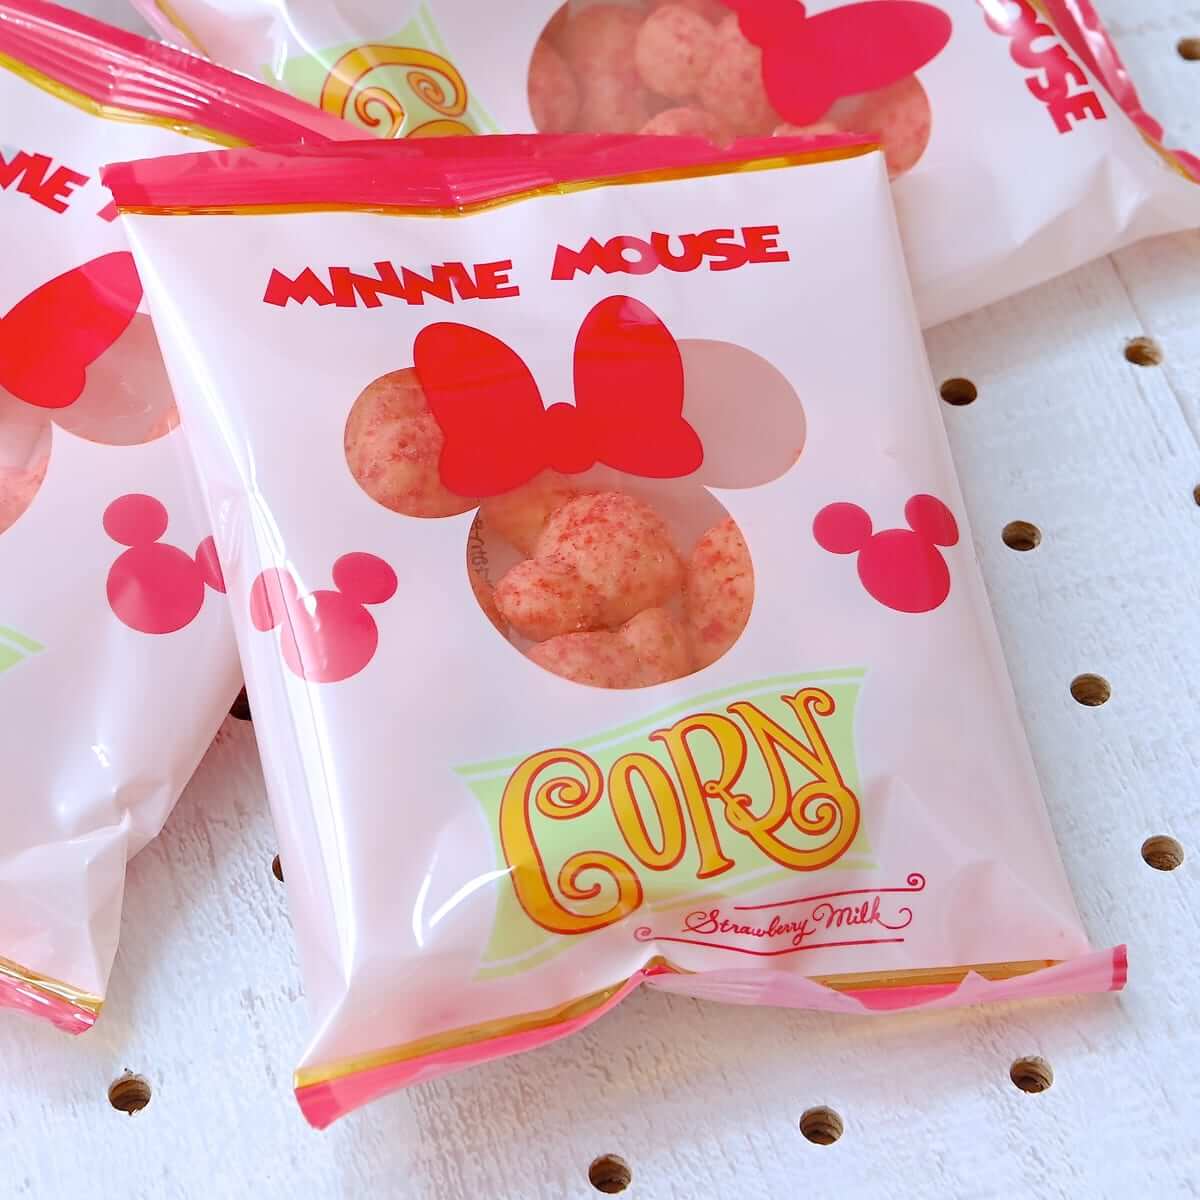 Disney SWEETS COLLECTION by 東京ばな奈『ミニーマウス/コーン いちごミルク味』パッケージ